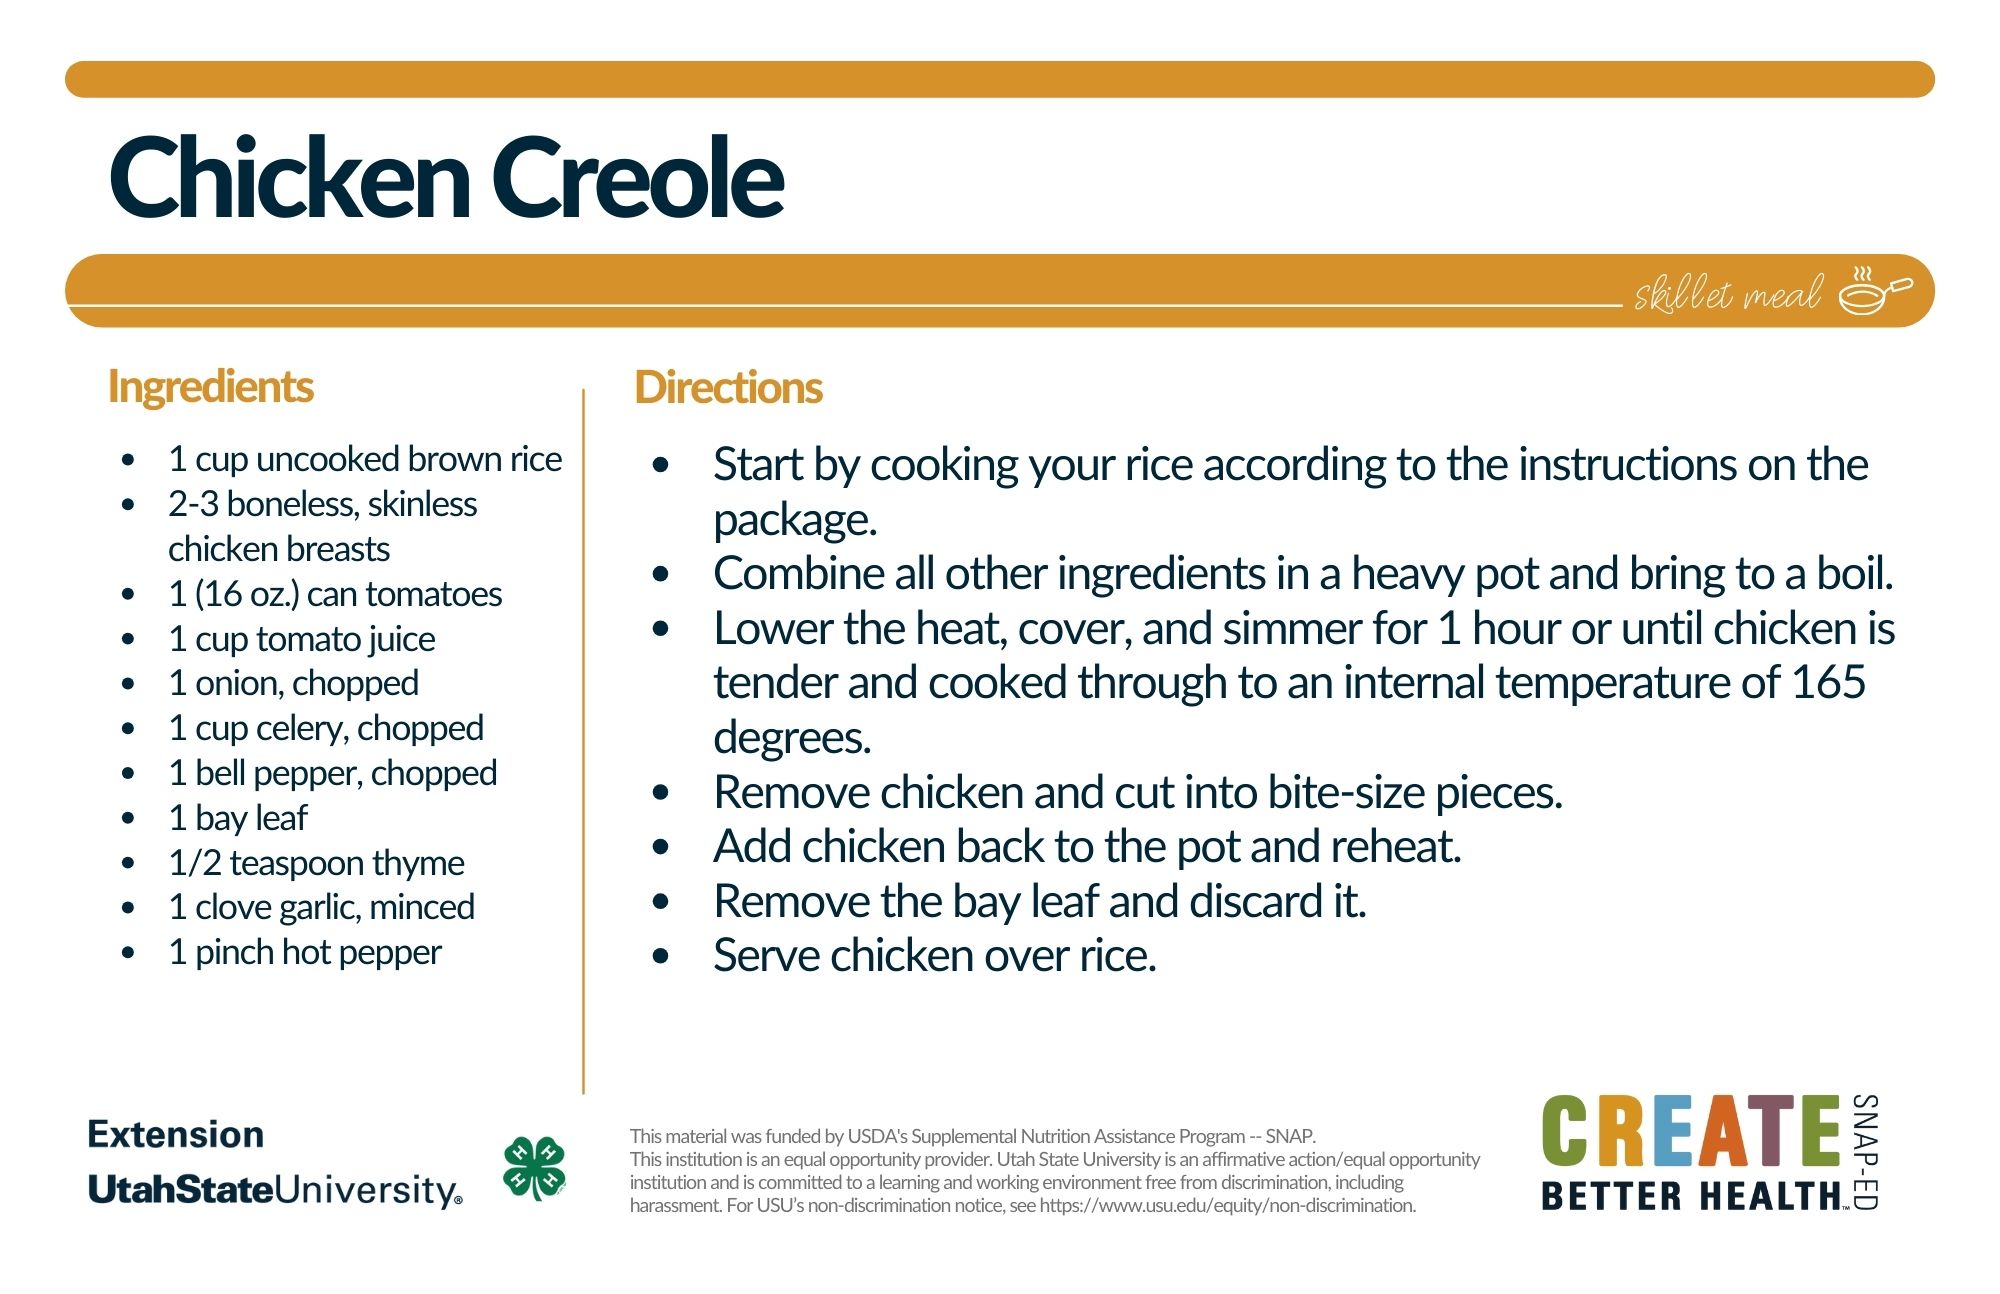 Chicken creole recipe card